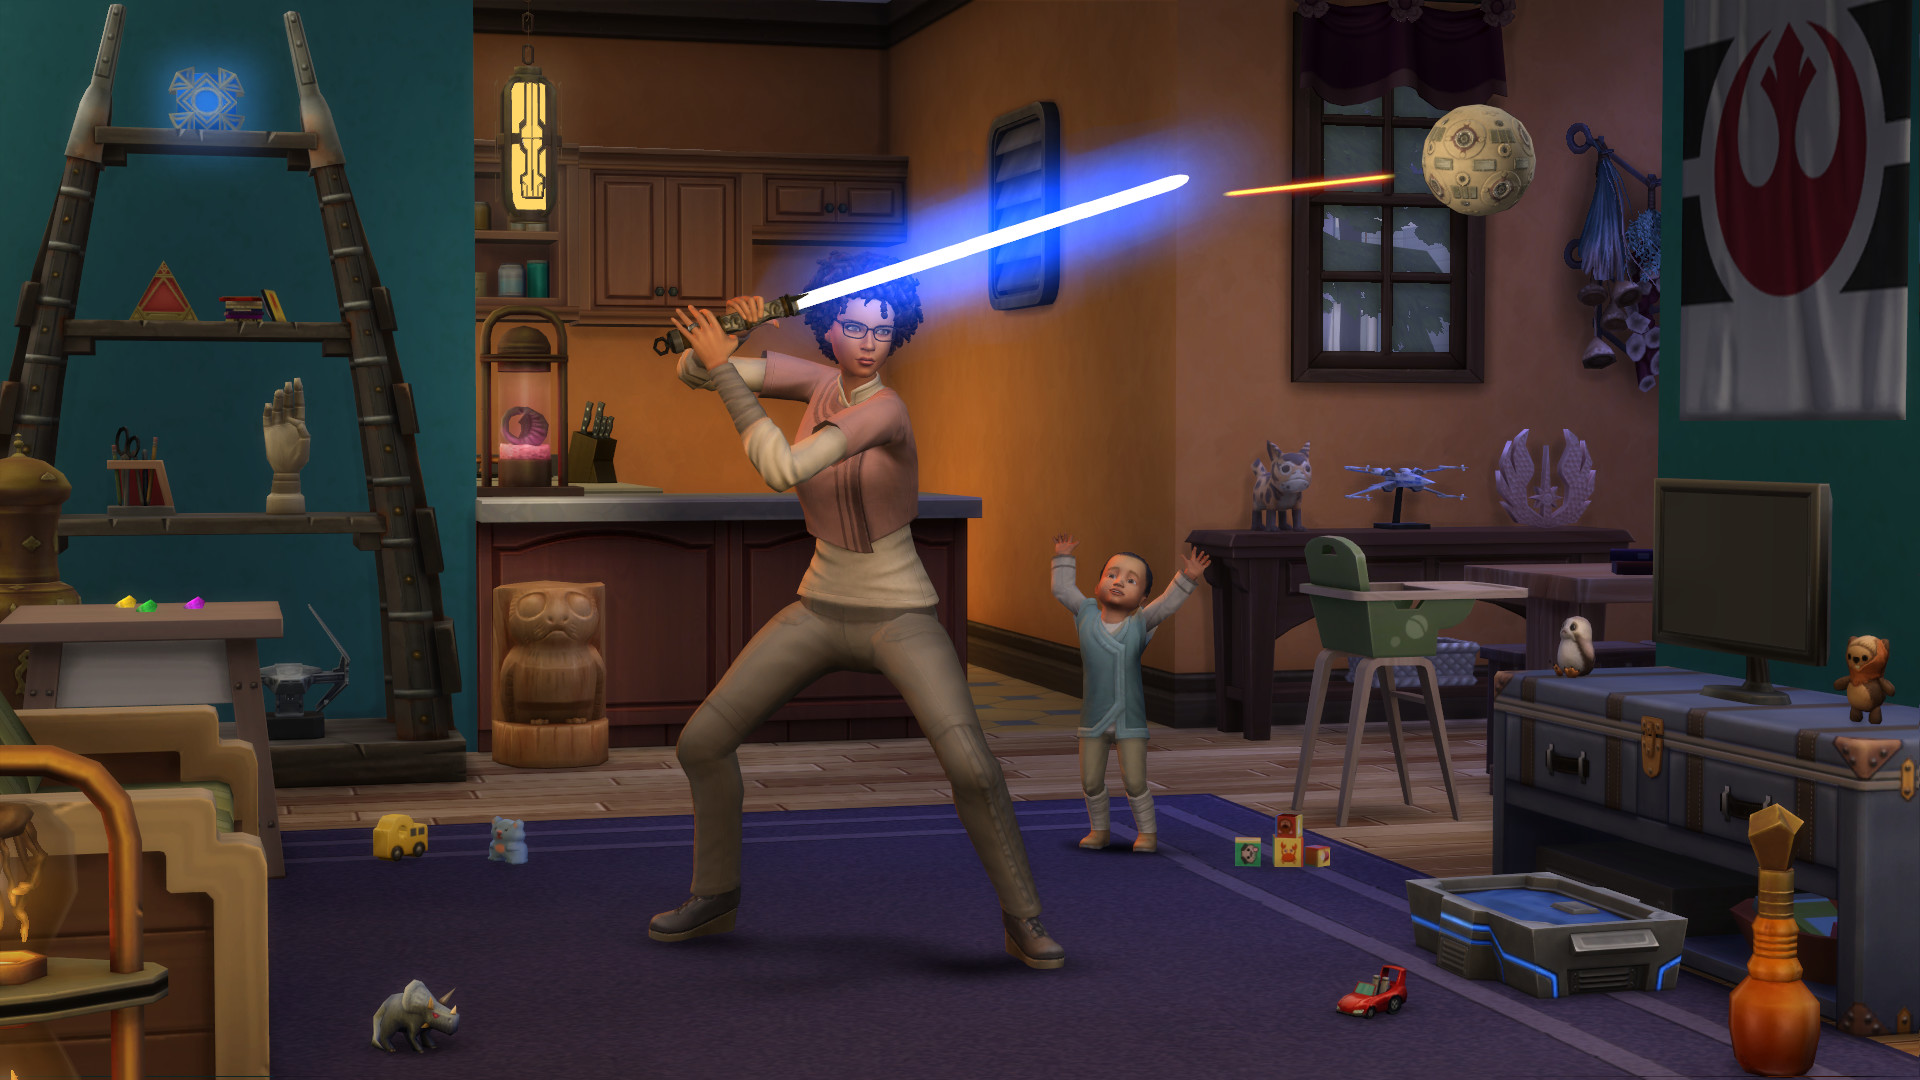 The Sims 4 Star Wars: Journey to Batuu - screenshot 1